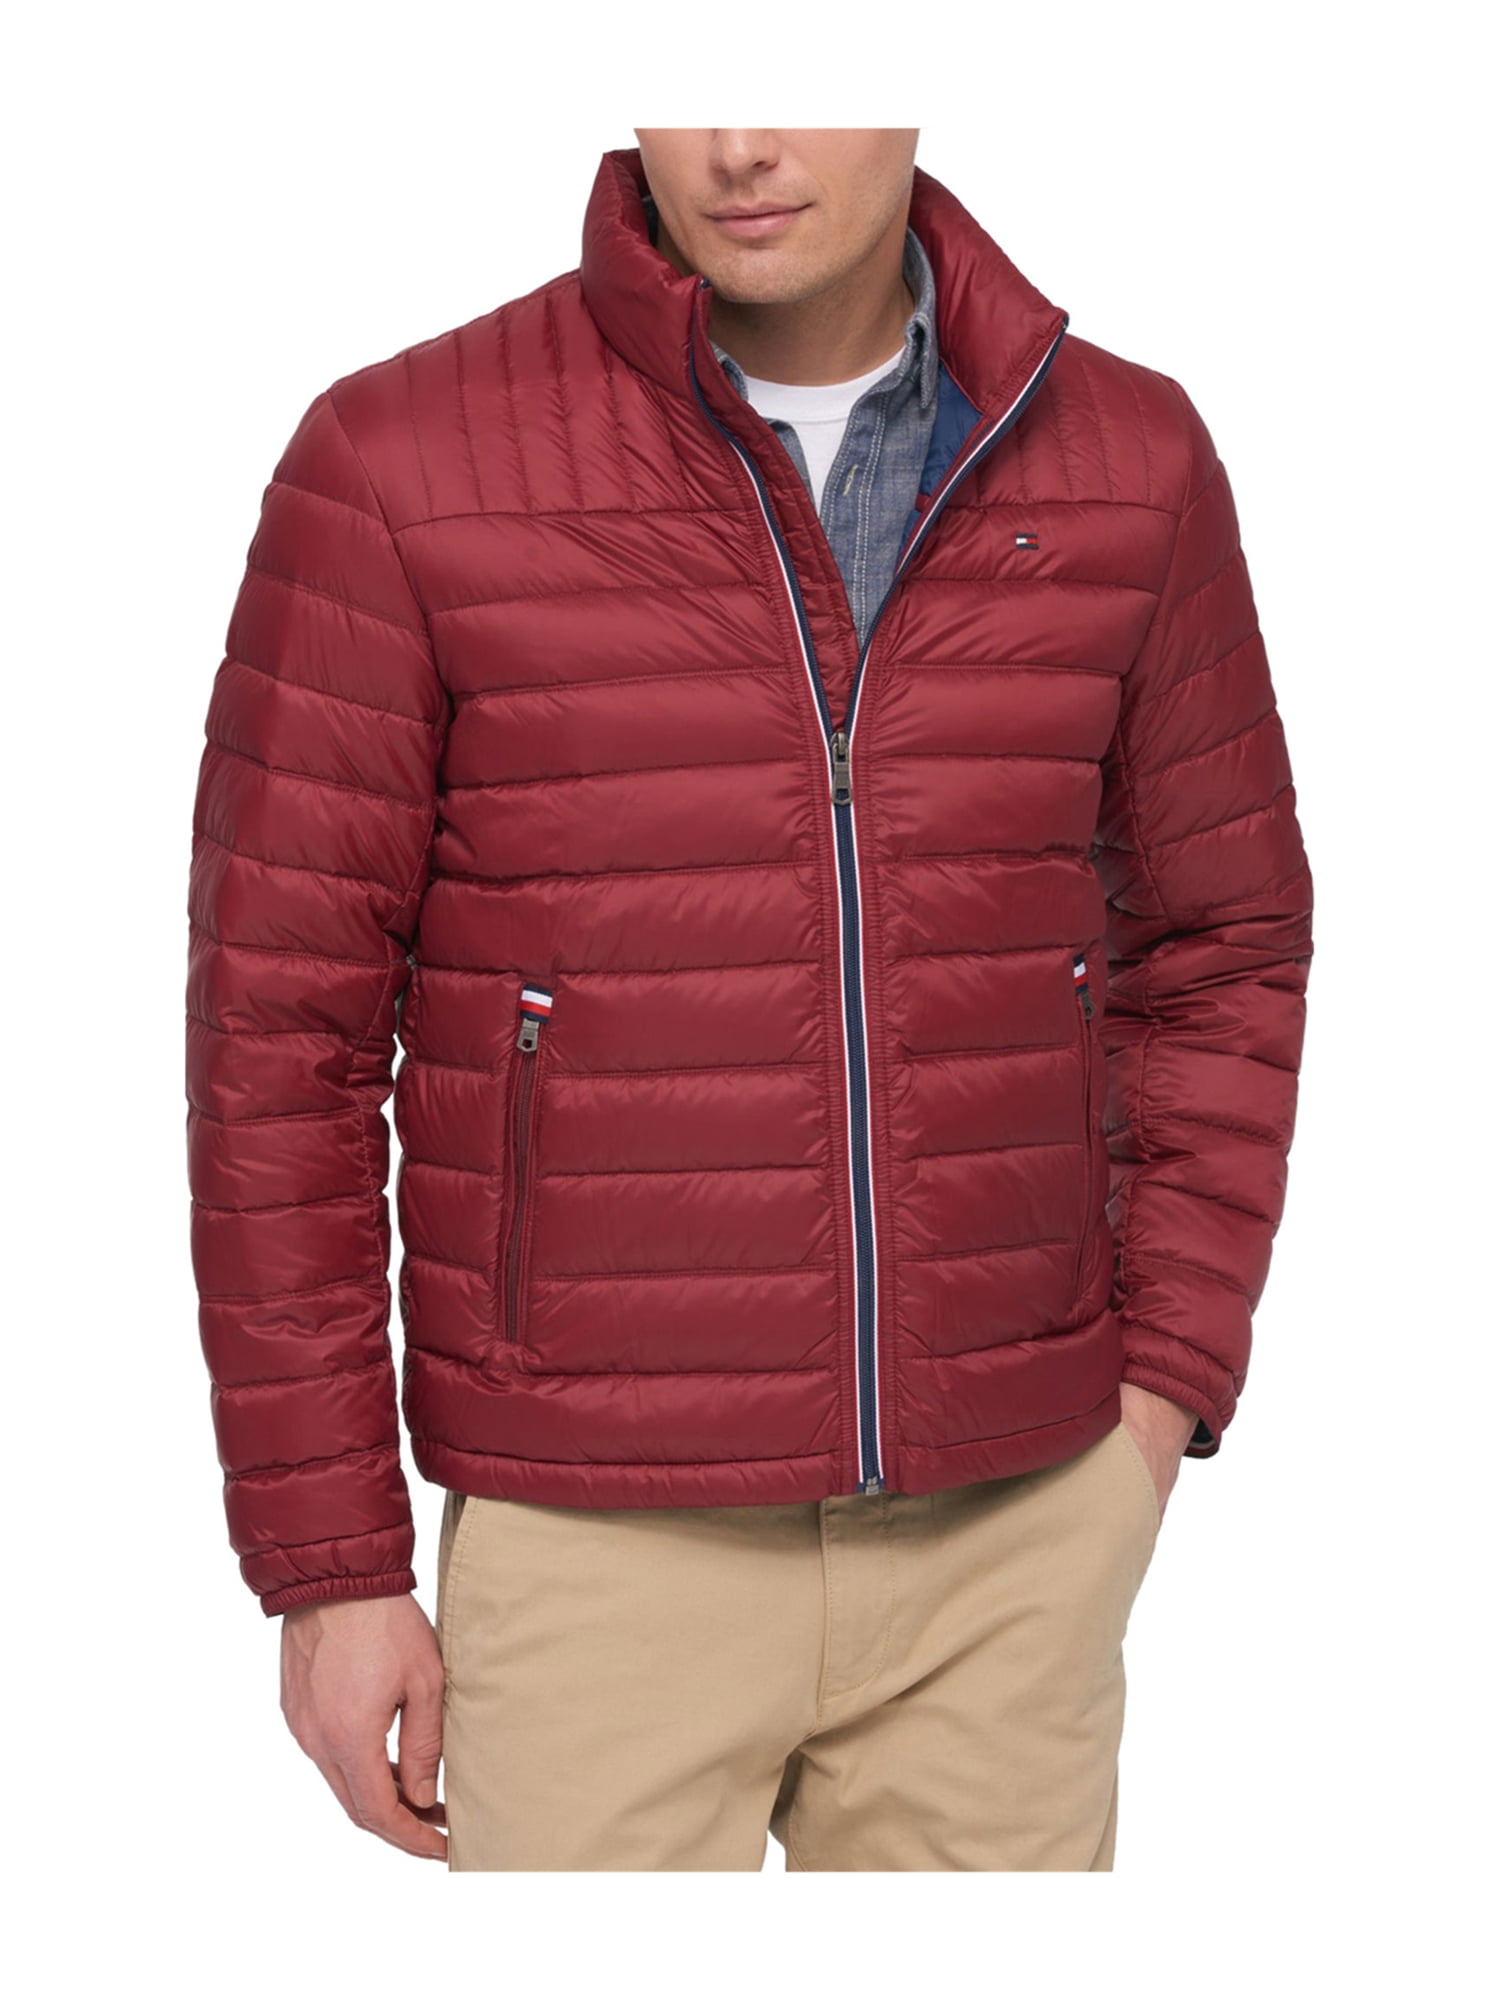 Tommy Hilfiger Mens Solid Puffer Jacket red 3XLT - Big & Tall | Walmart ...